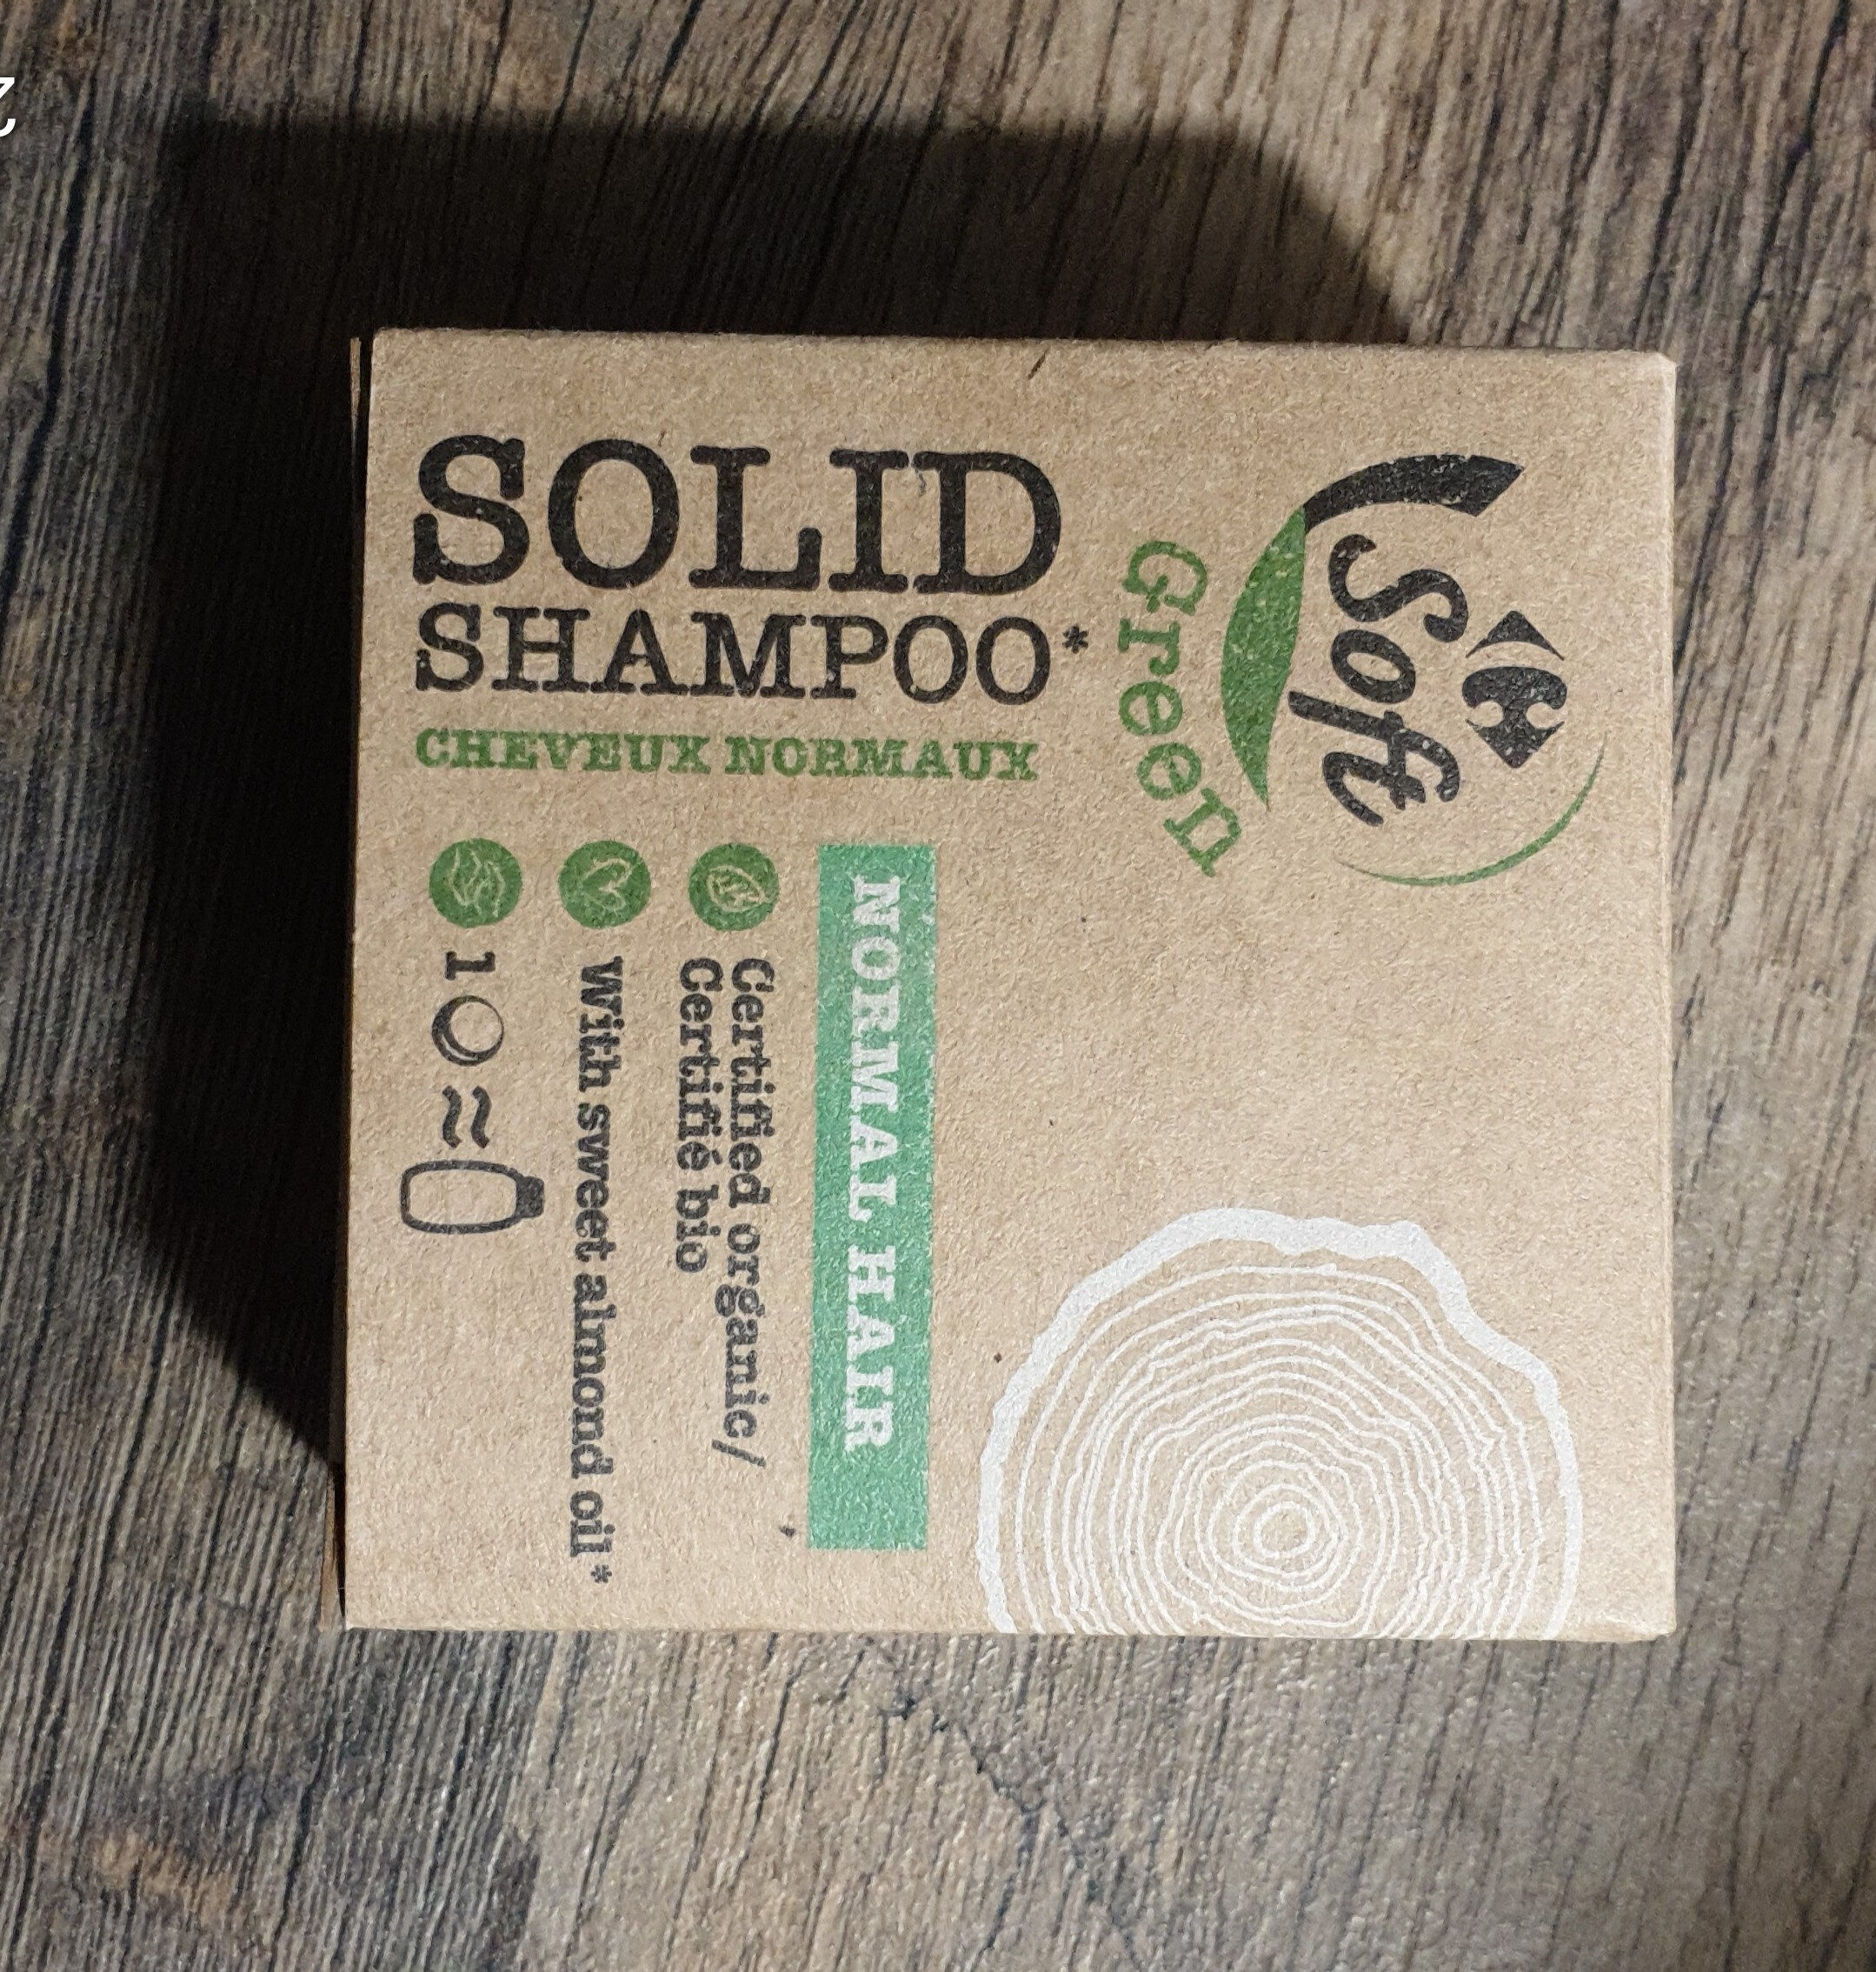 Solid SHAMPOO cheveux normaux - Produit - fr